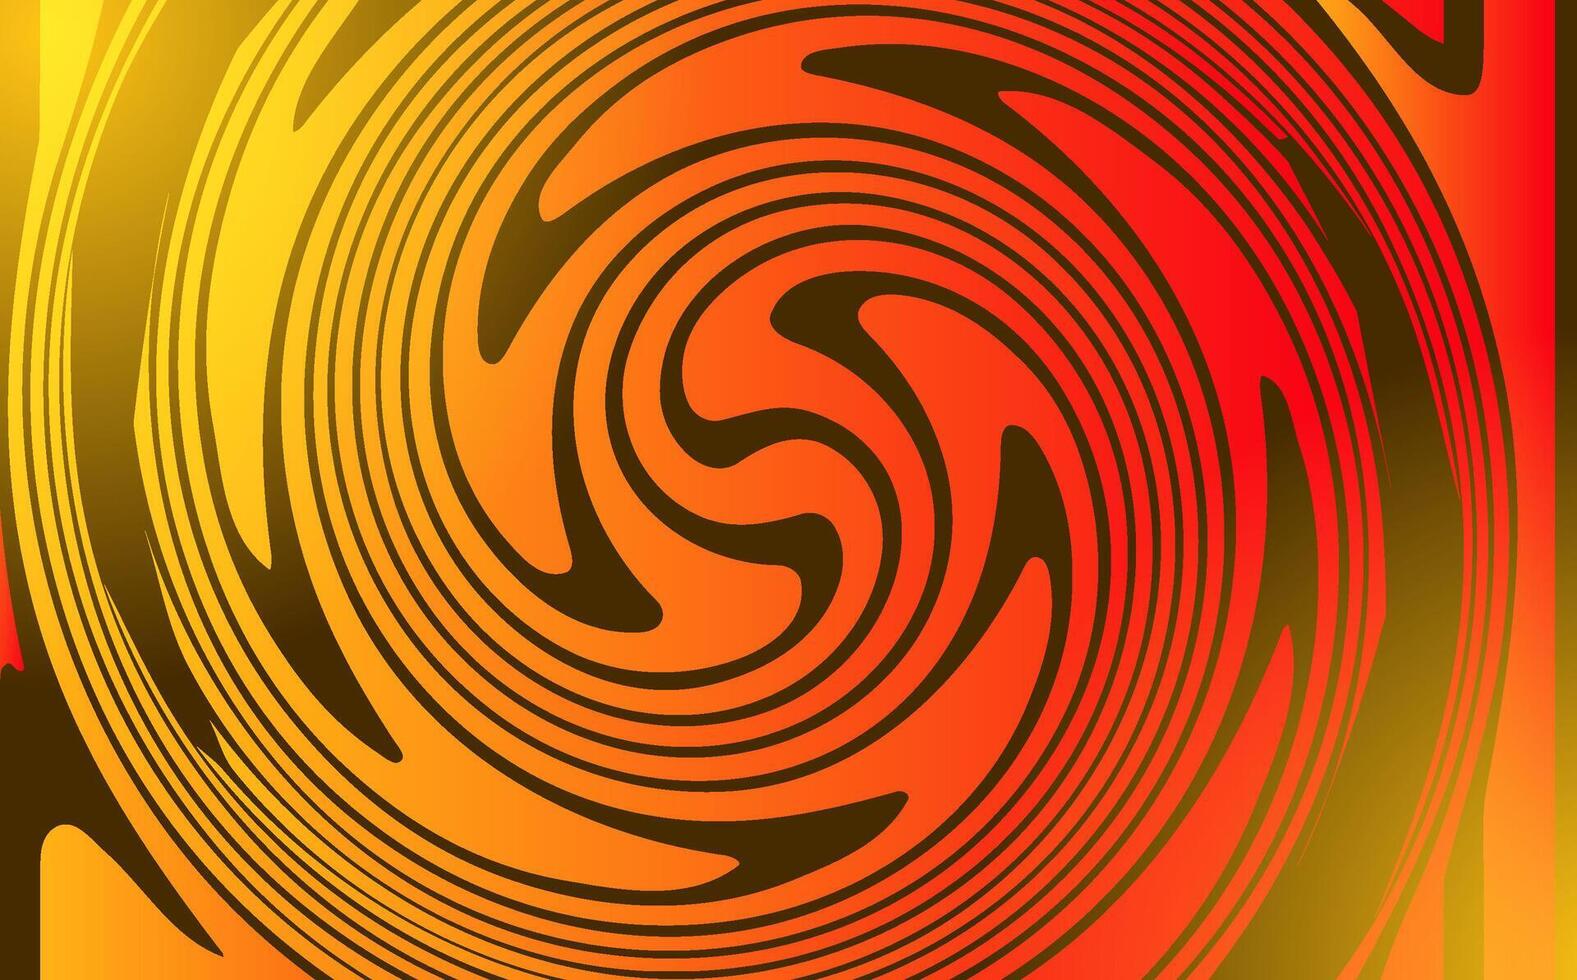 orange swirl circle abstract background design vector